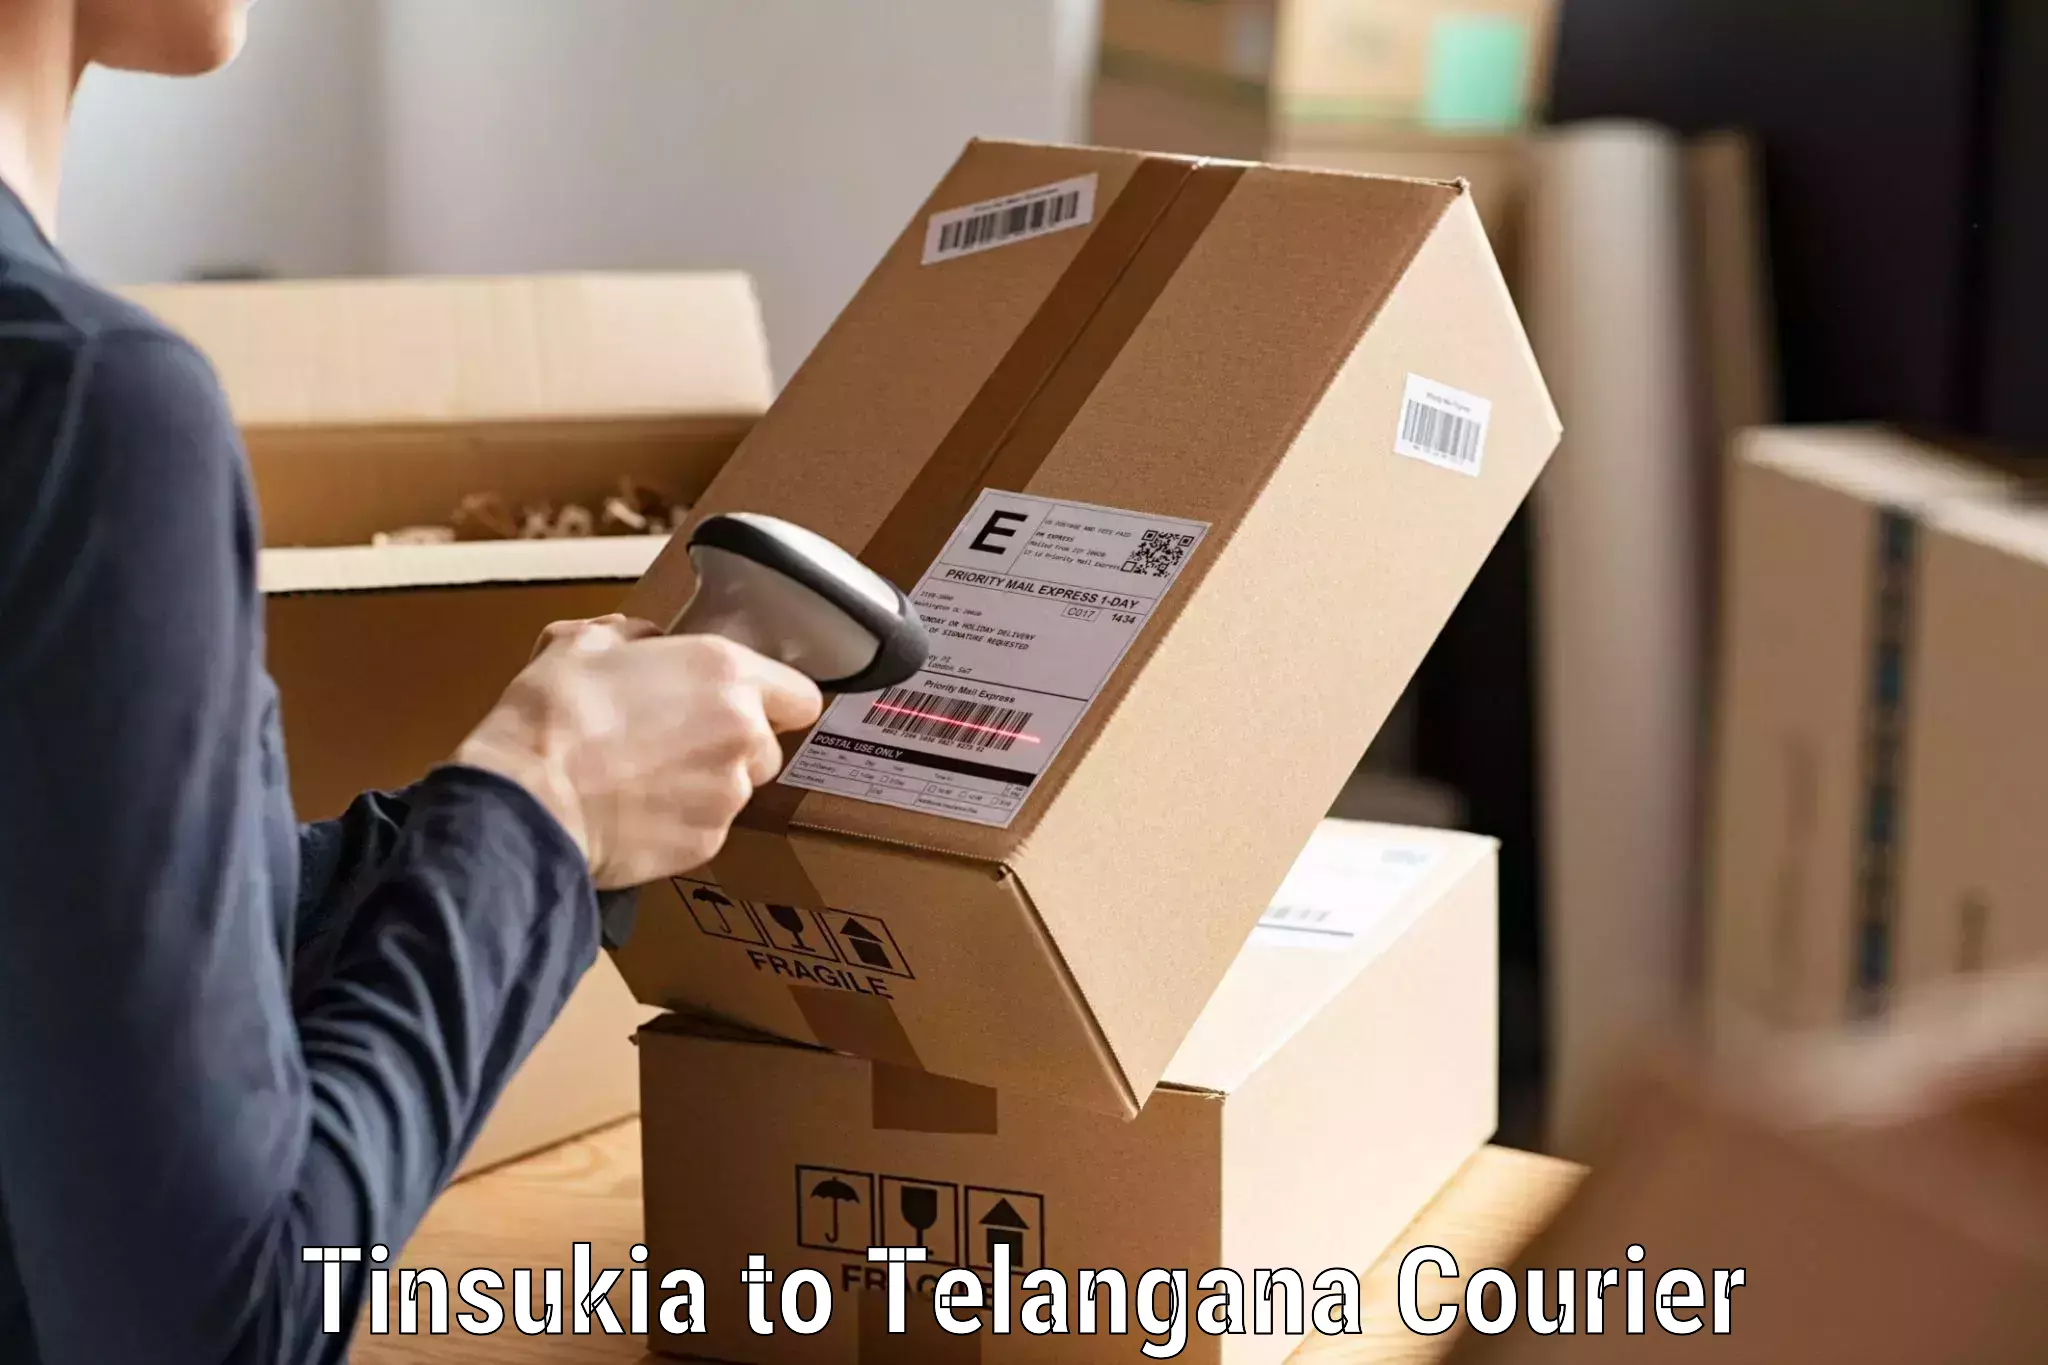 Efficient parcel service Tinsukia to Adilabad